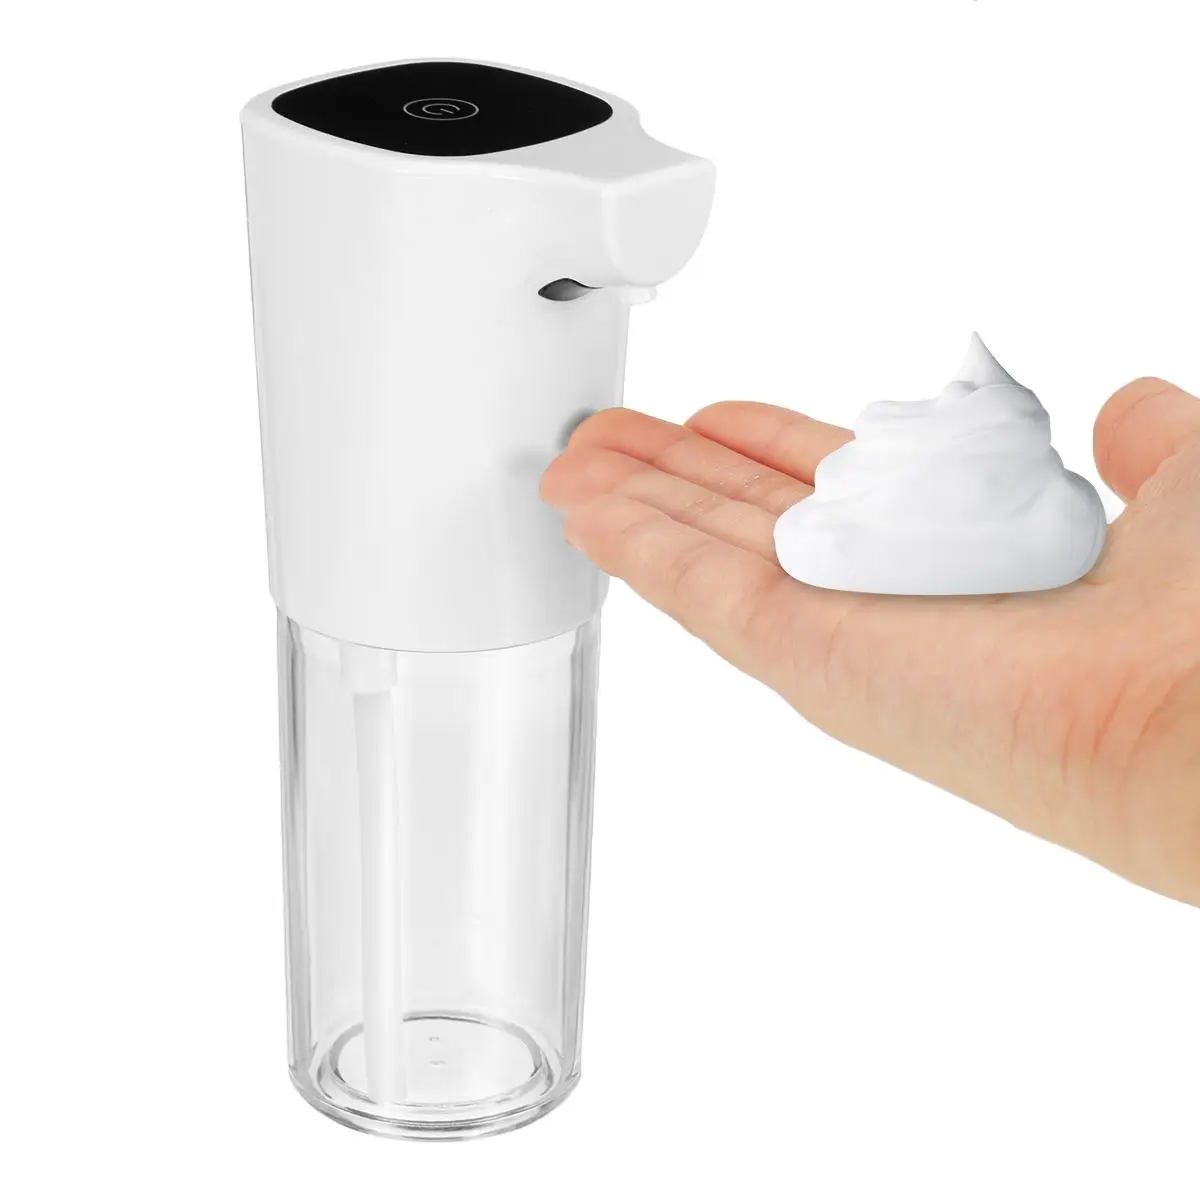 

275ML Automatic Liquid Soap Dispenser Smart Sensors soap dispensador Touchless ABS soap Dispenser for Kitchen Bathroom